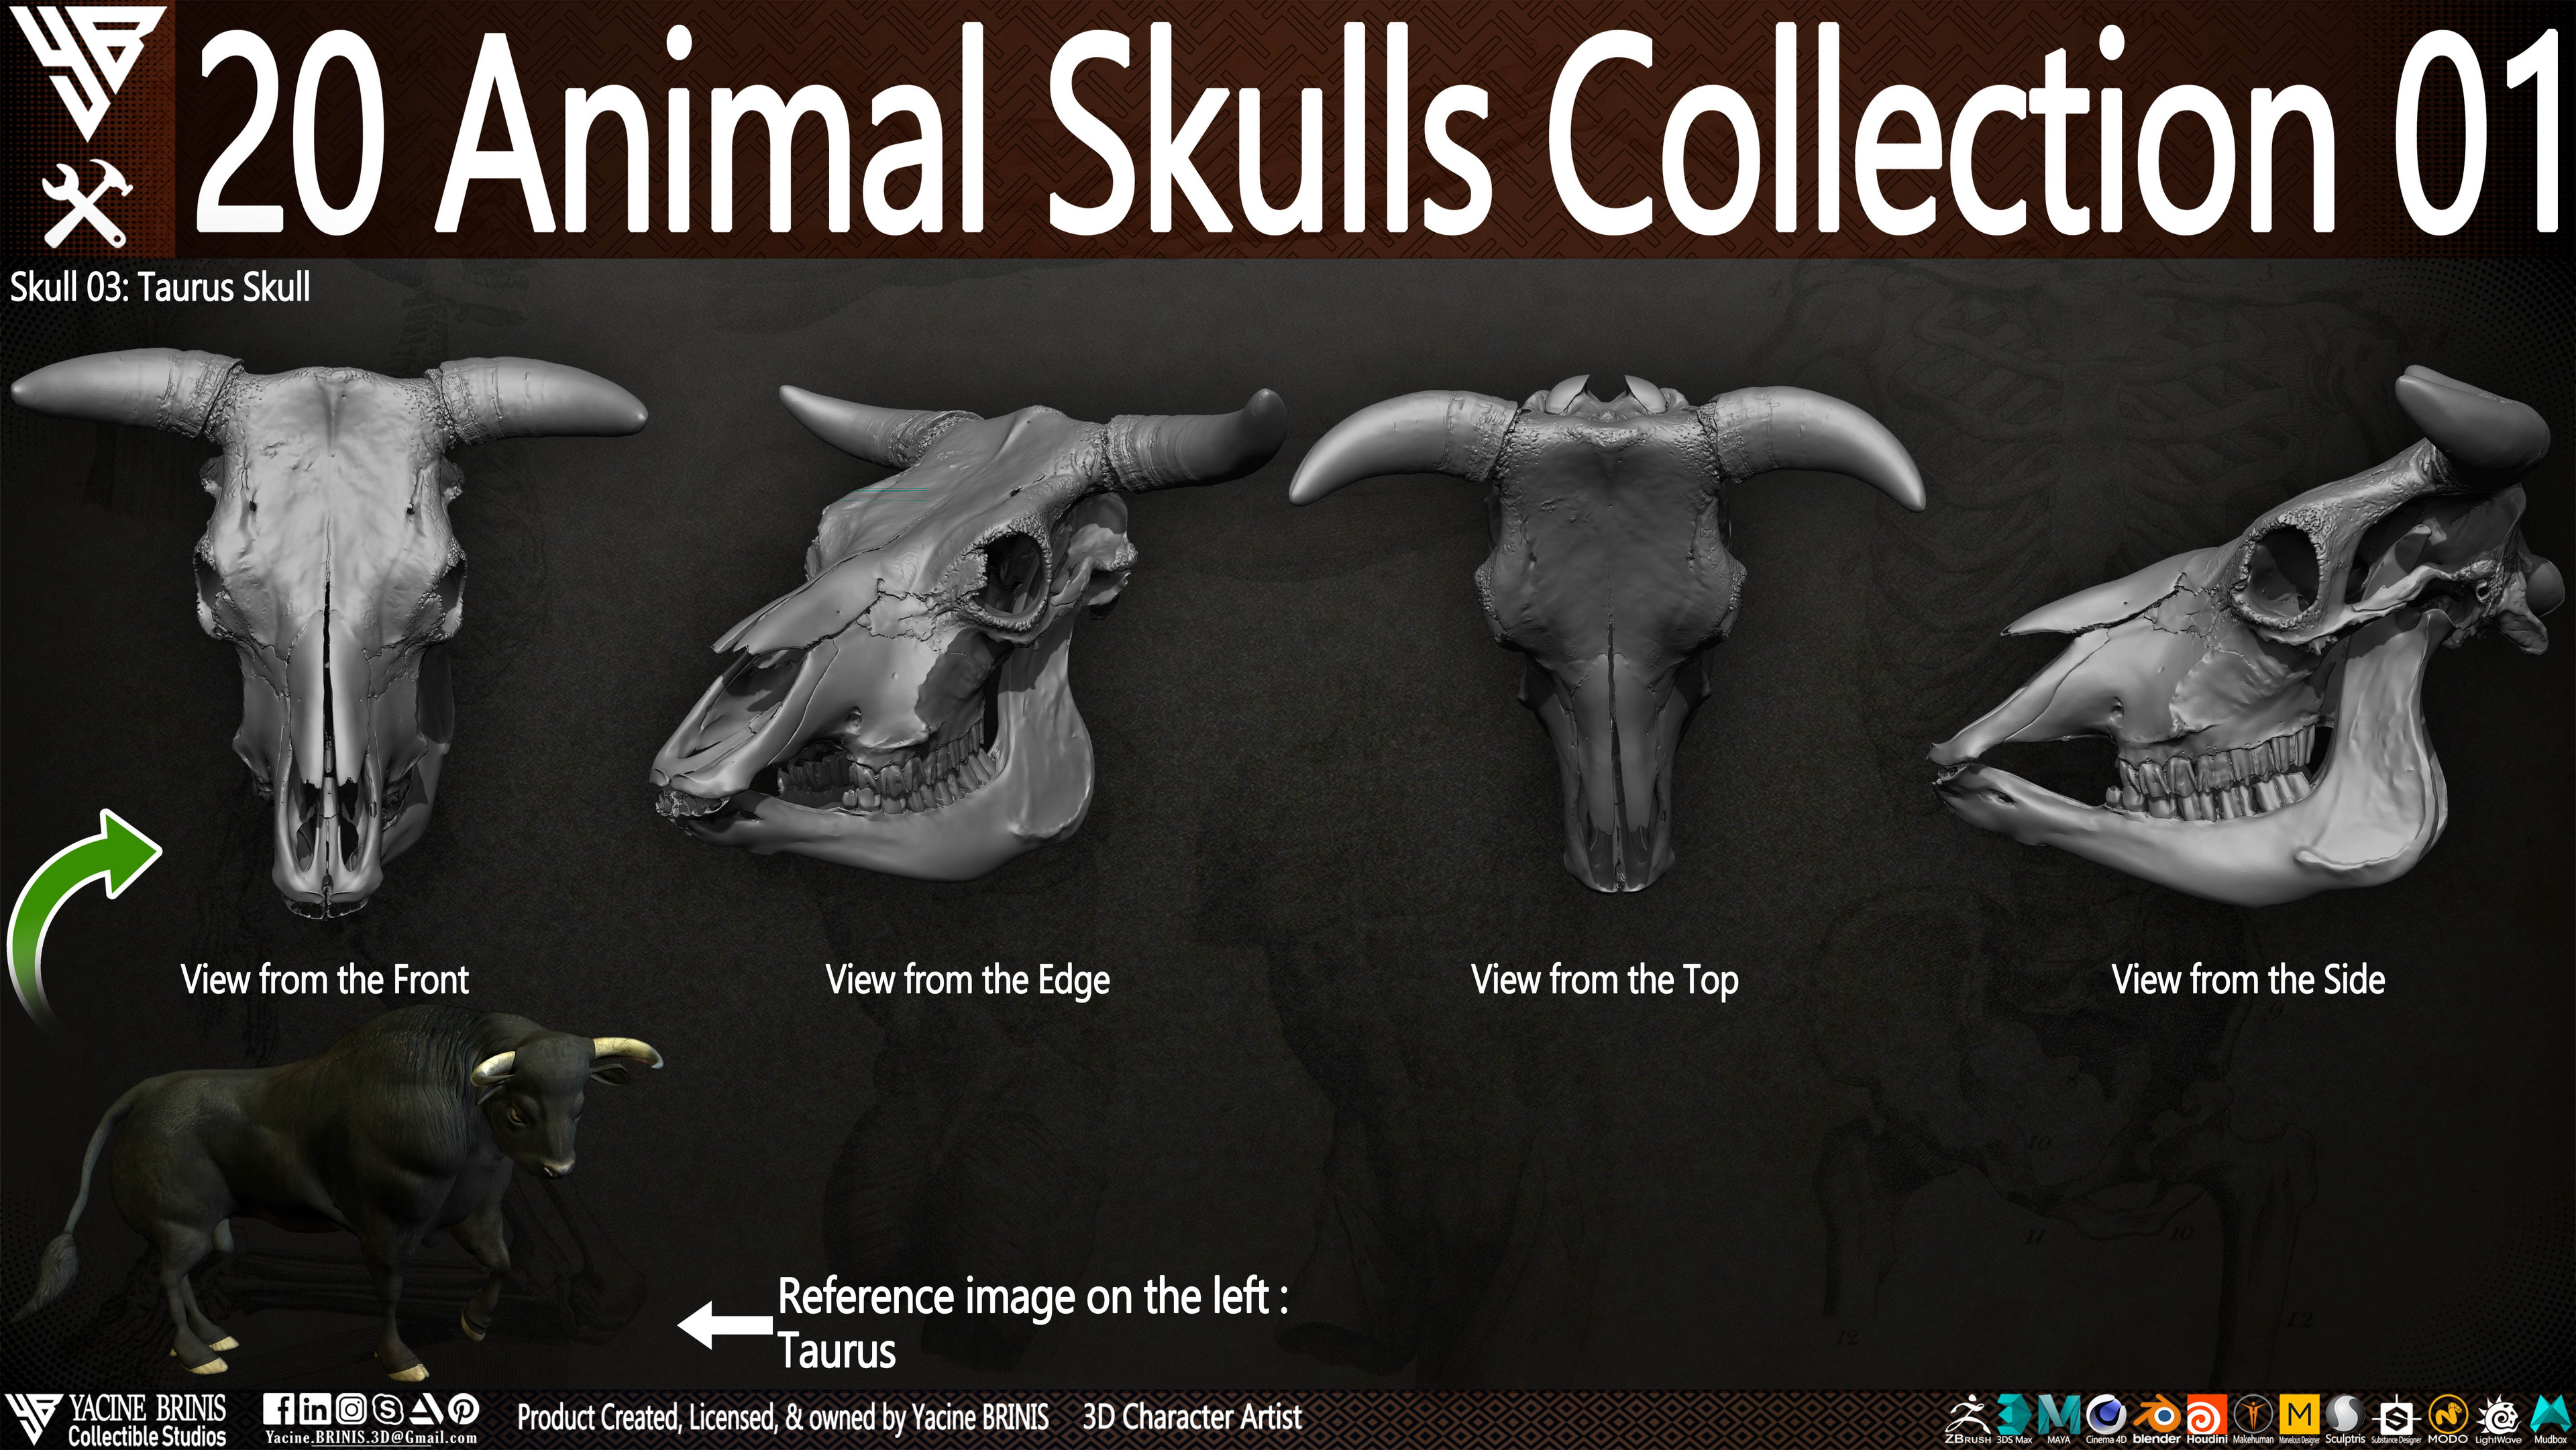 20 Animal Skulls Collection 03 By Yacine BRINIS Set 022